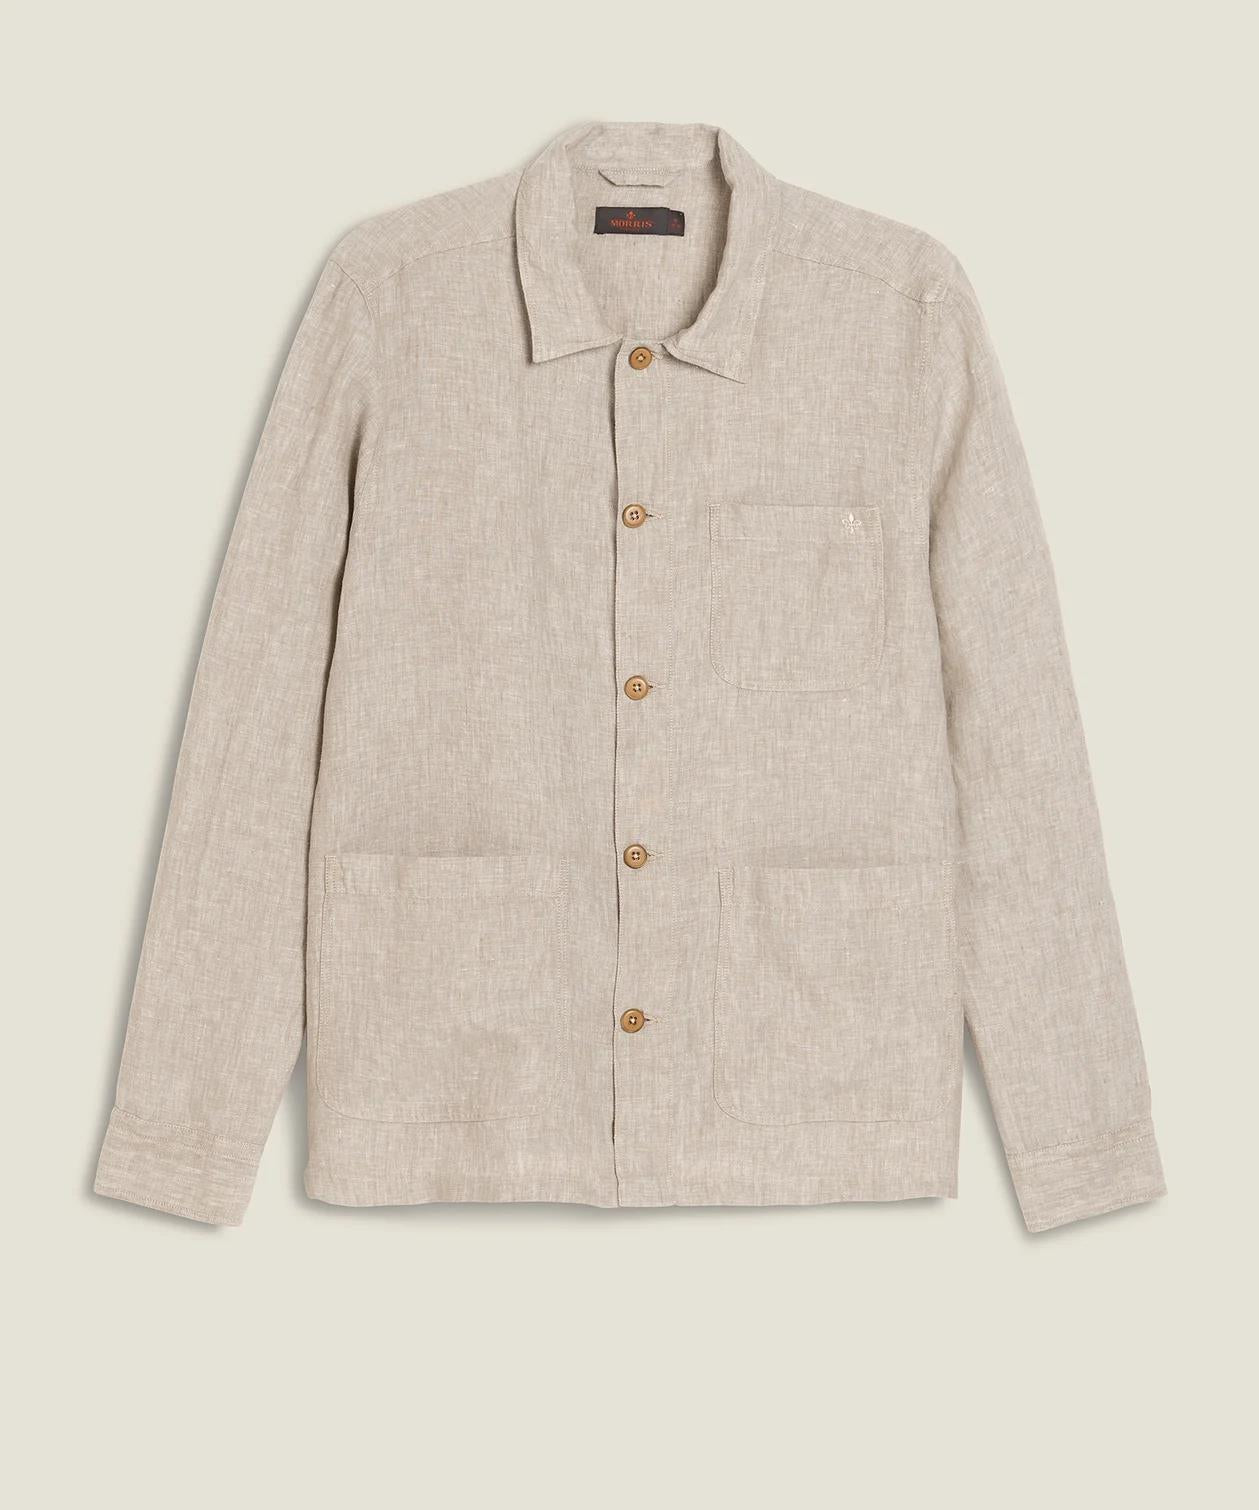 Ethienne Lt Shirt Jacket Khaki-Morris Stockholm-06 Khaki-Product.Variant,2102,5661147-ProductId,801485-Product.Number,Herre,Khaki,morris-stockholm,Overshirt